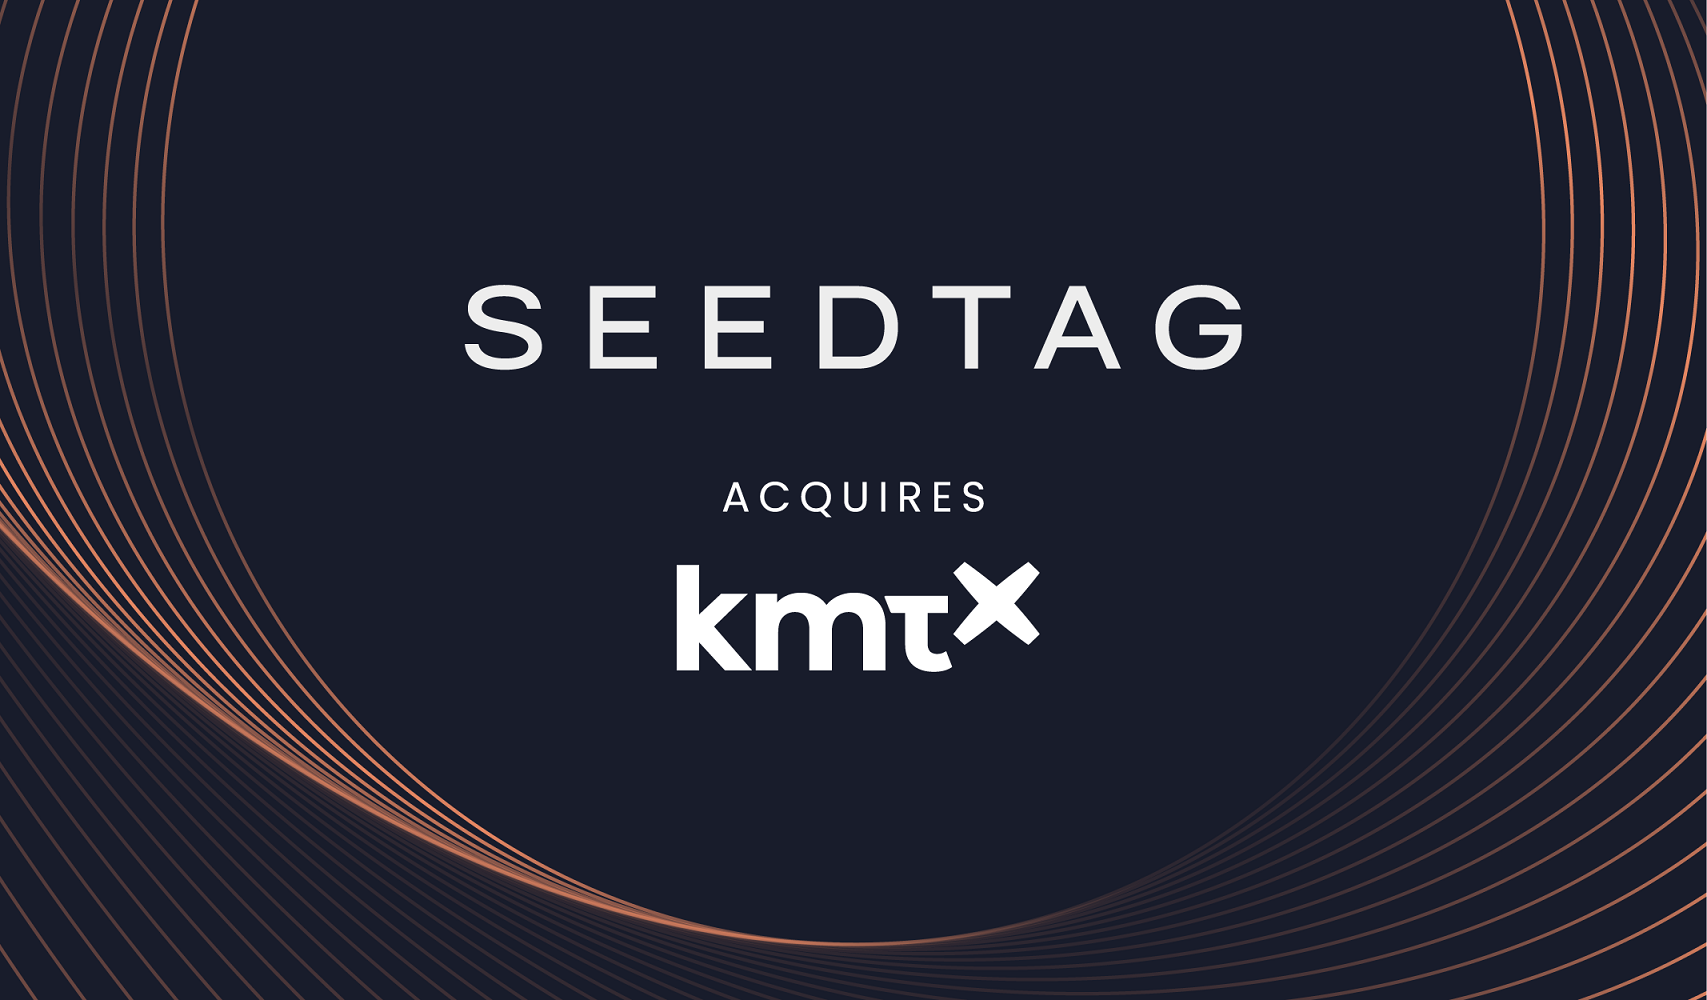 Seedtag Acquires KMTX